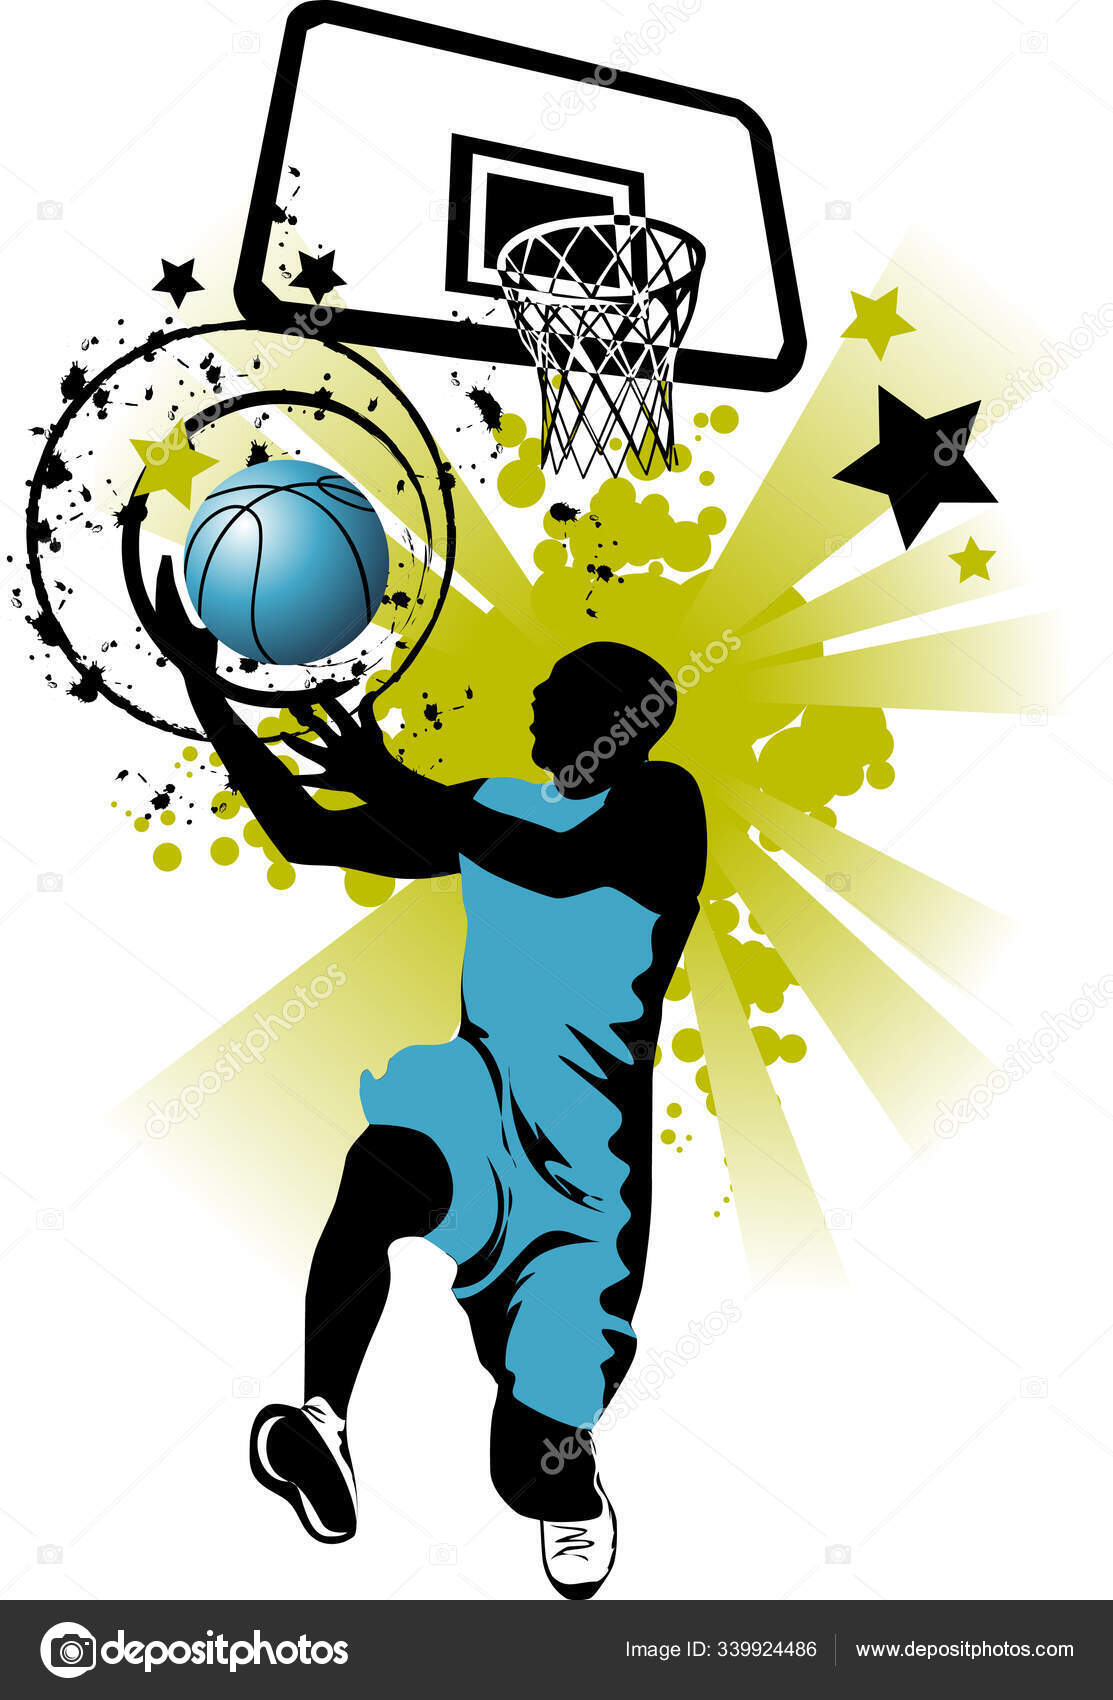 jogador de basquete atleta no jogo de bola. basquetebol. arremesso do anel.  estilo plano isométrico. 7771533 Vetor no Vecteezy